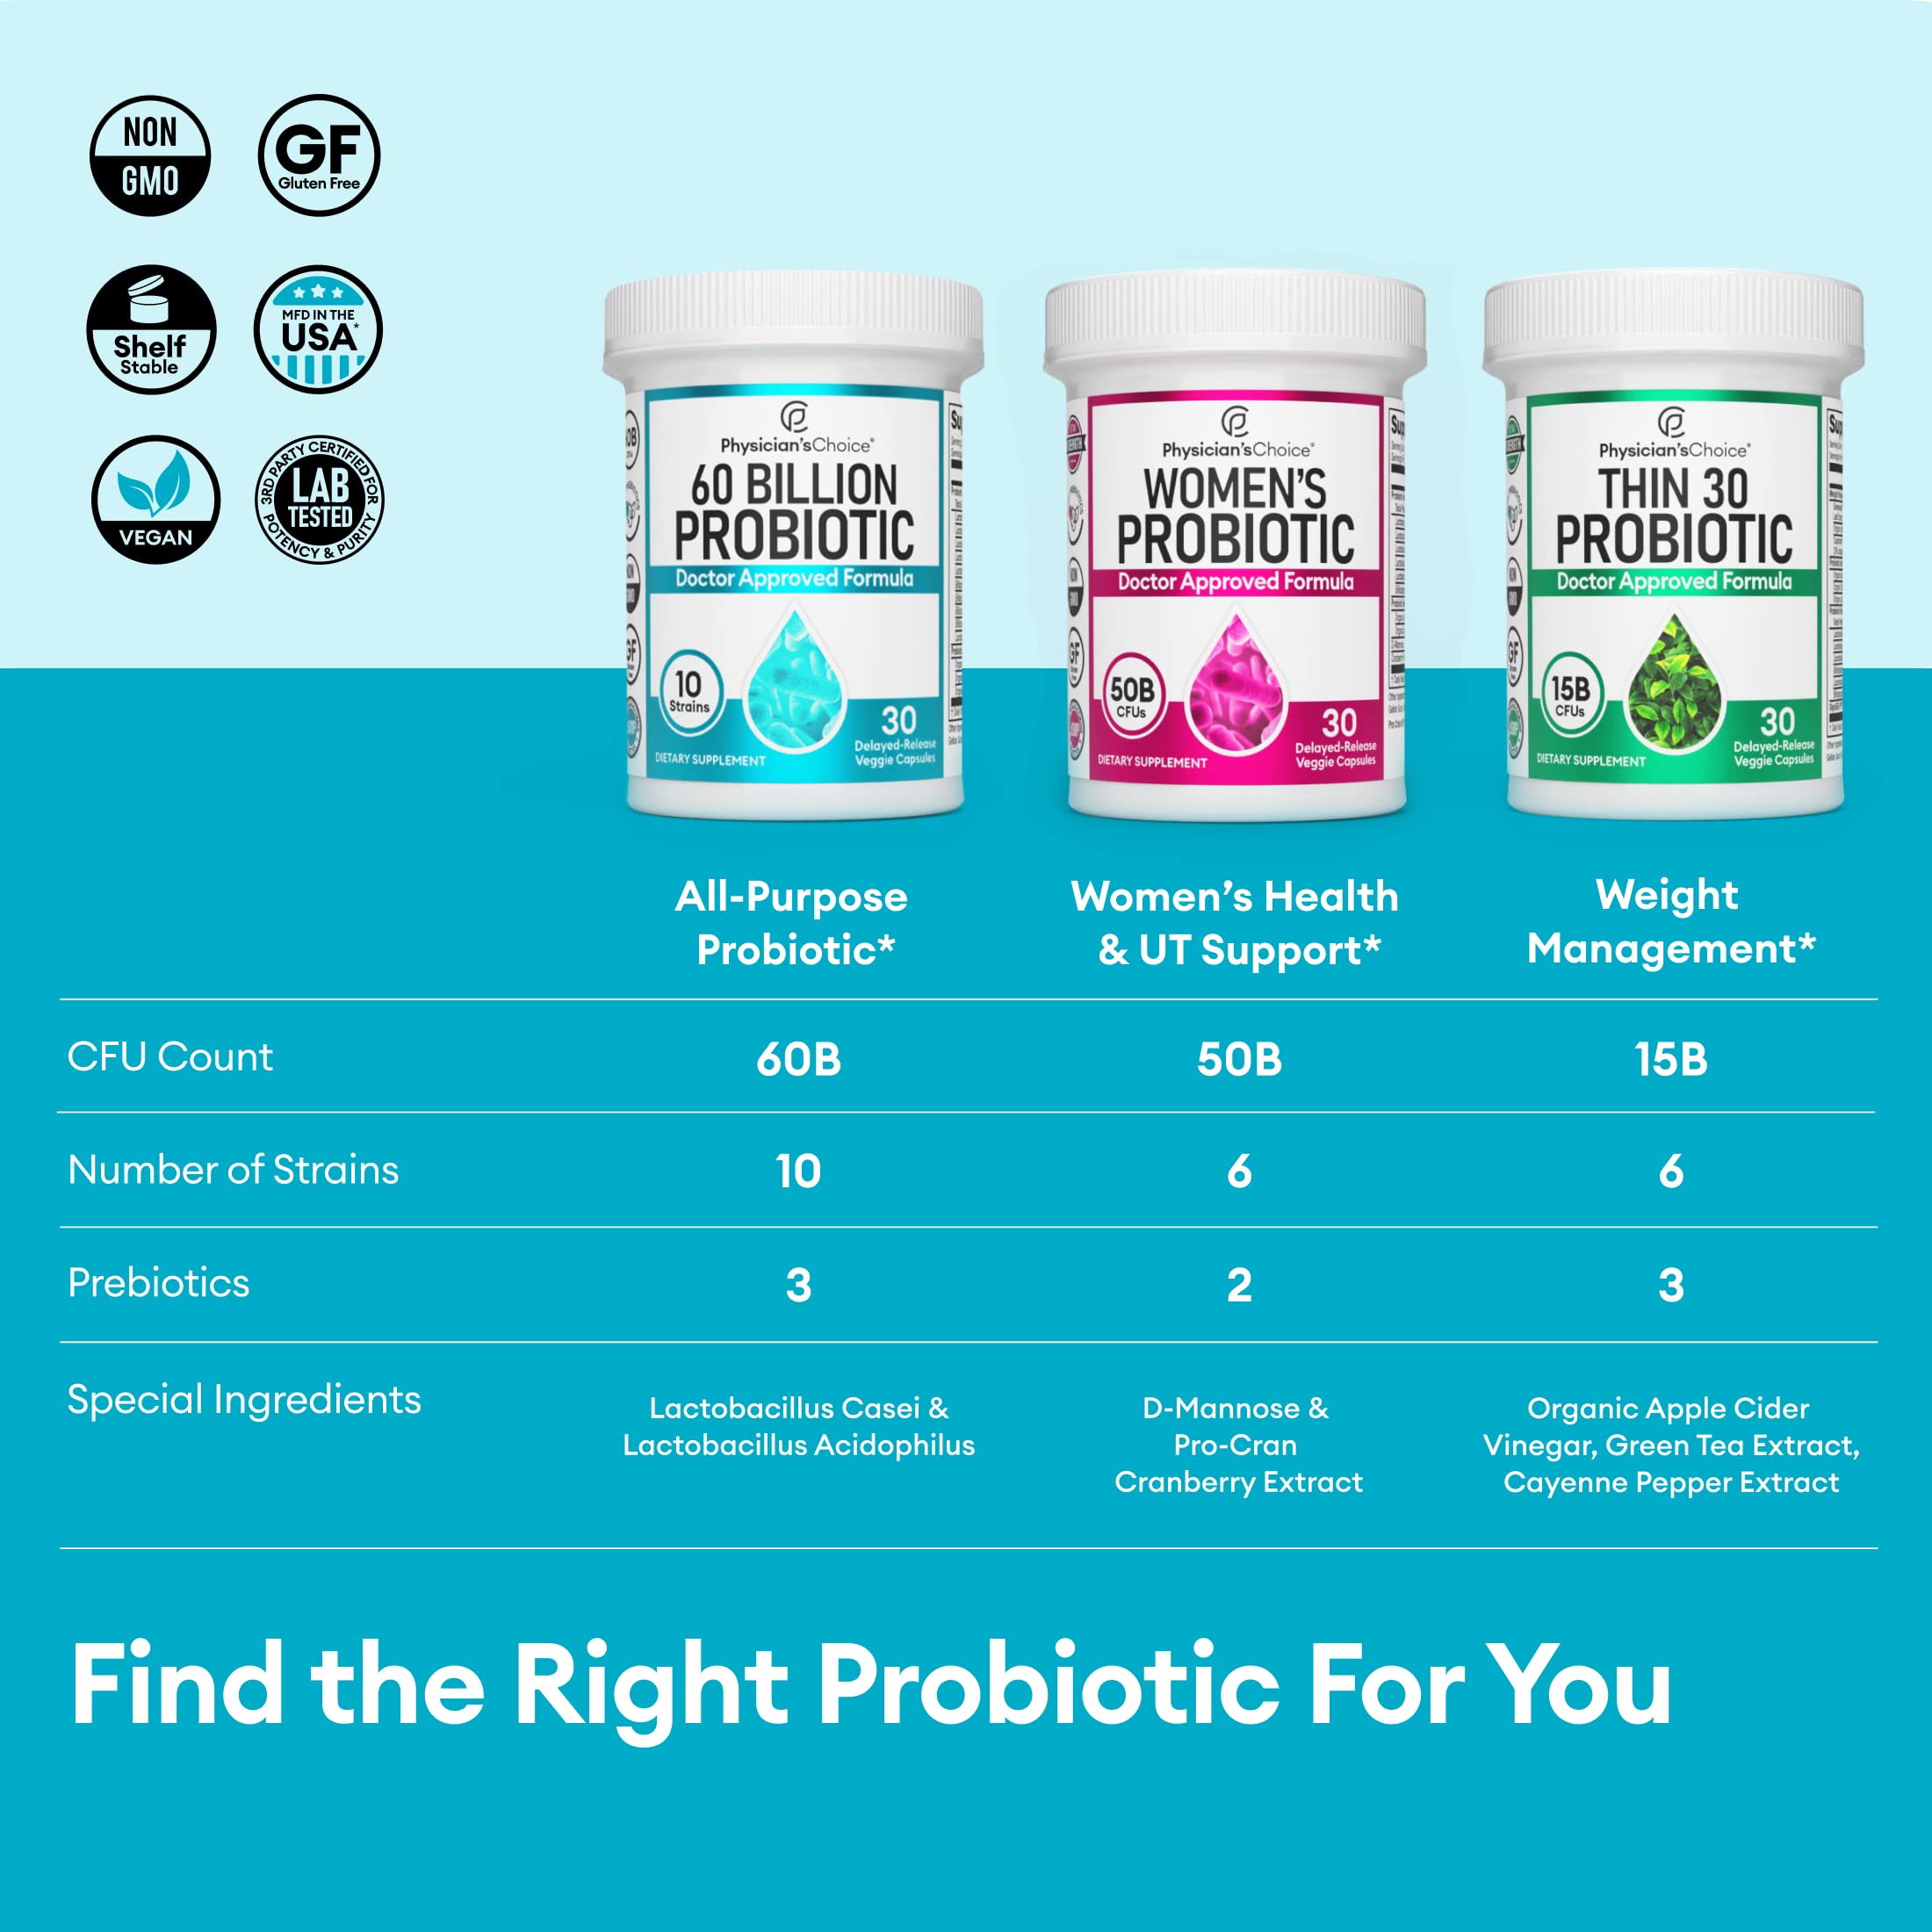 Physician's CHOICE Probiotics 60 Billion CFU - 10 Strains + Organic Prebiotics - Digestive & Gut Health - Supports Occasional Constipation, Diarrhea, Gas & Bloating - Probiotics For Women & Men - 30ct